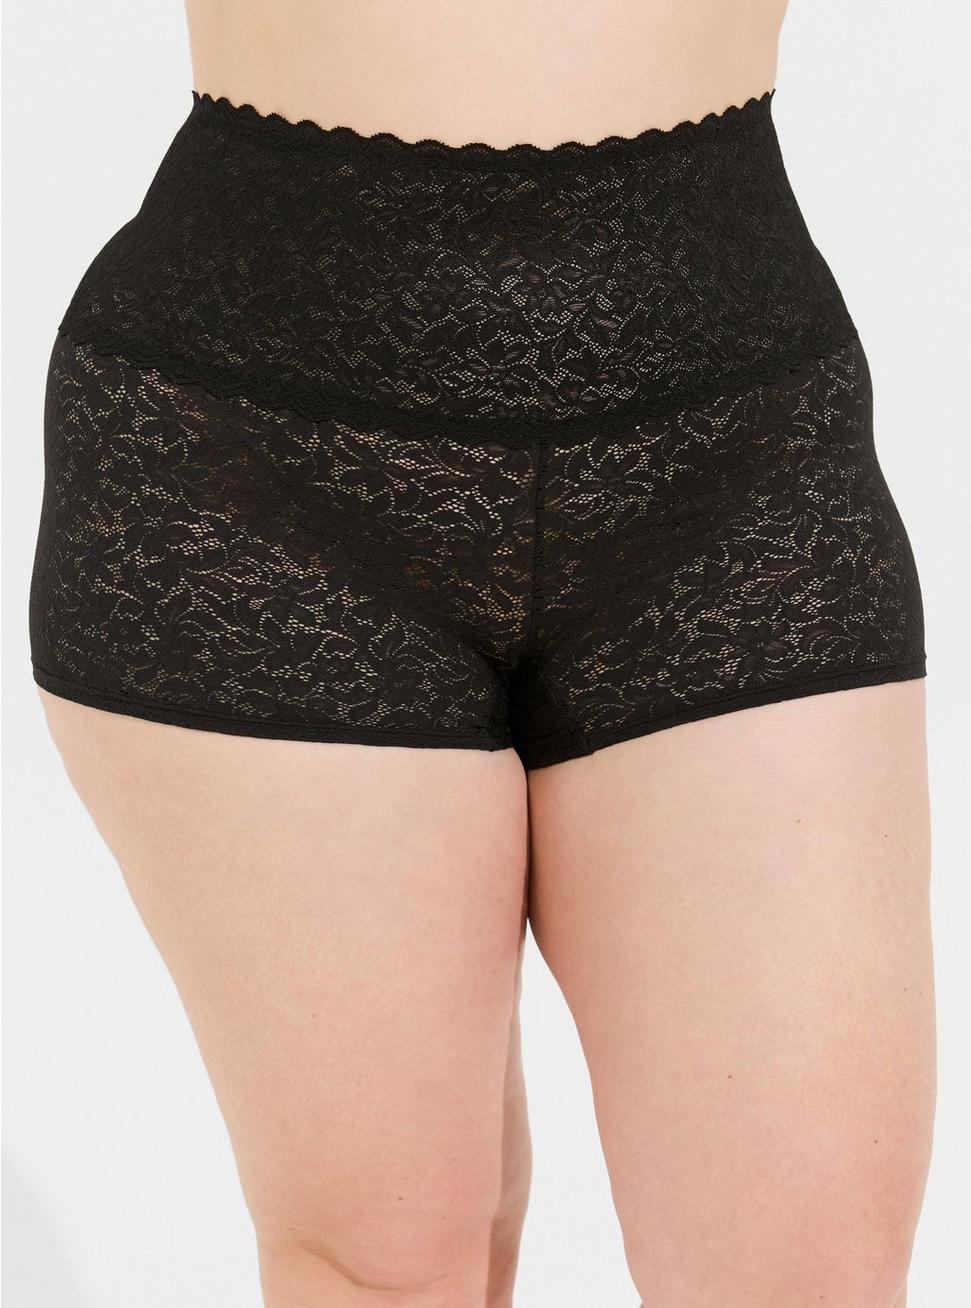 Plus Size Shortie Panty - 4-Way Stretch Lace Black, RICH BLACK, alternate